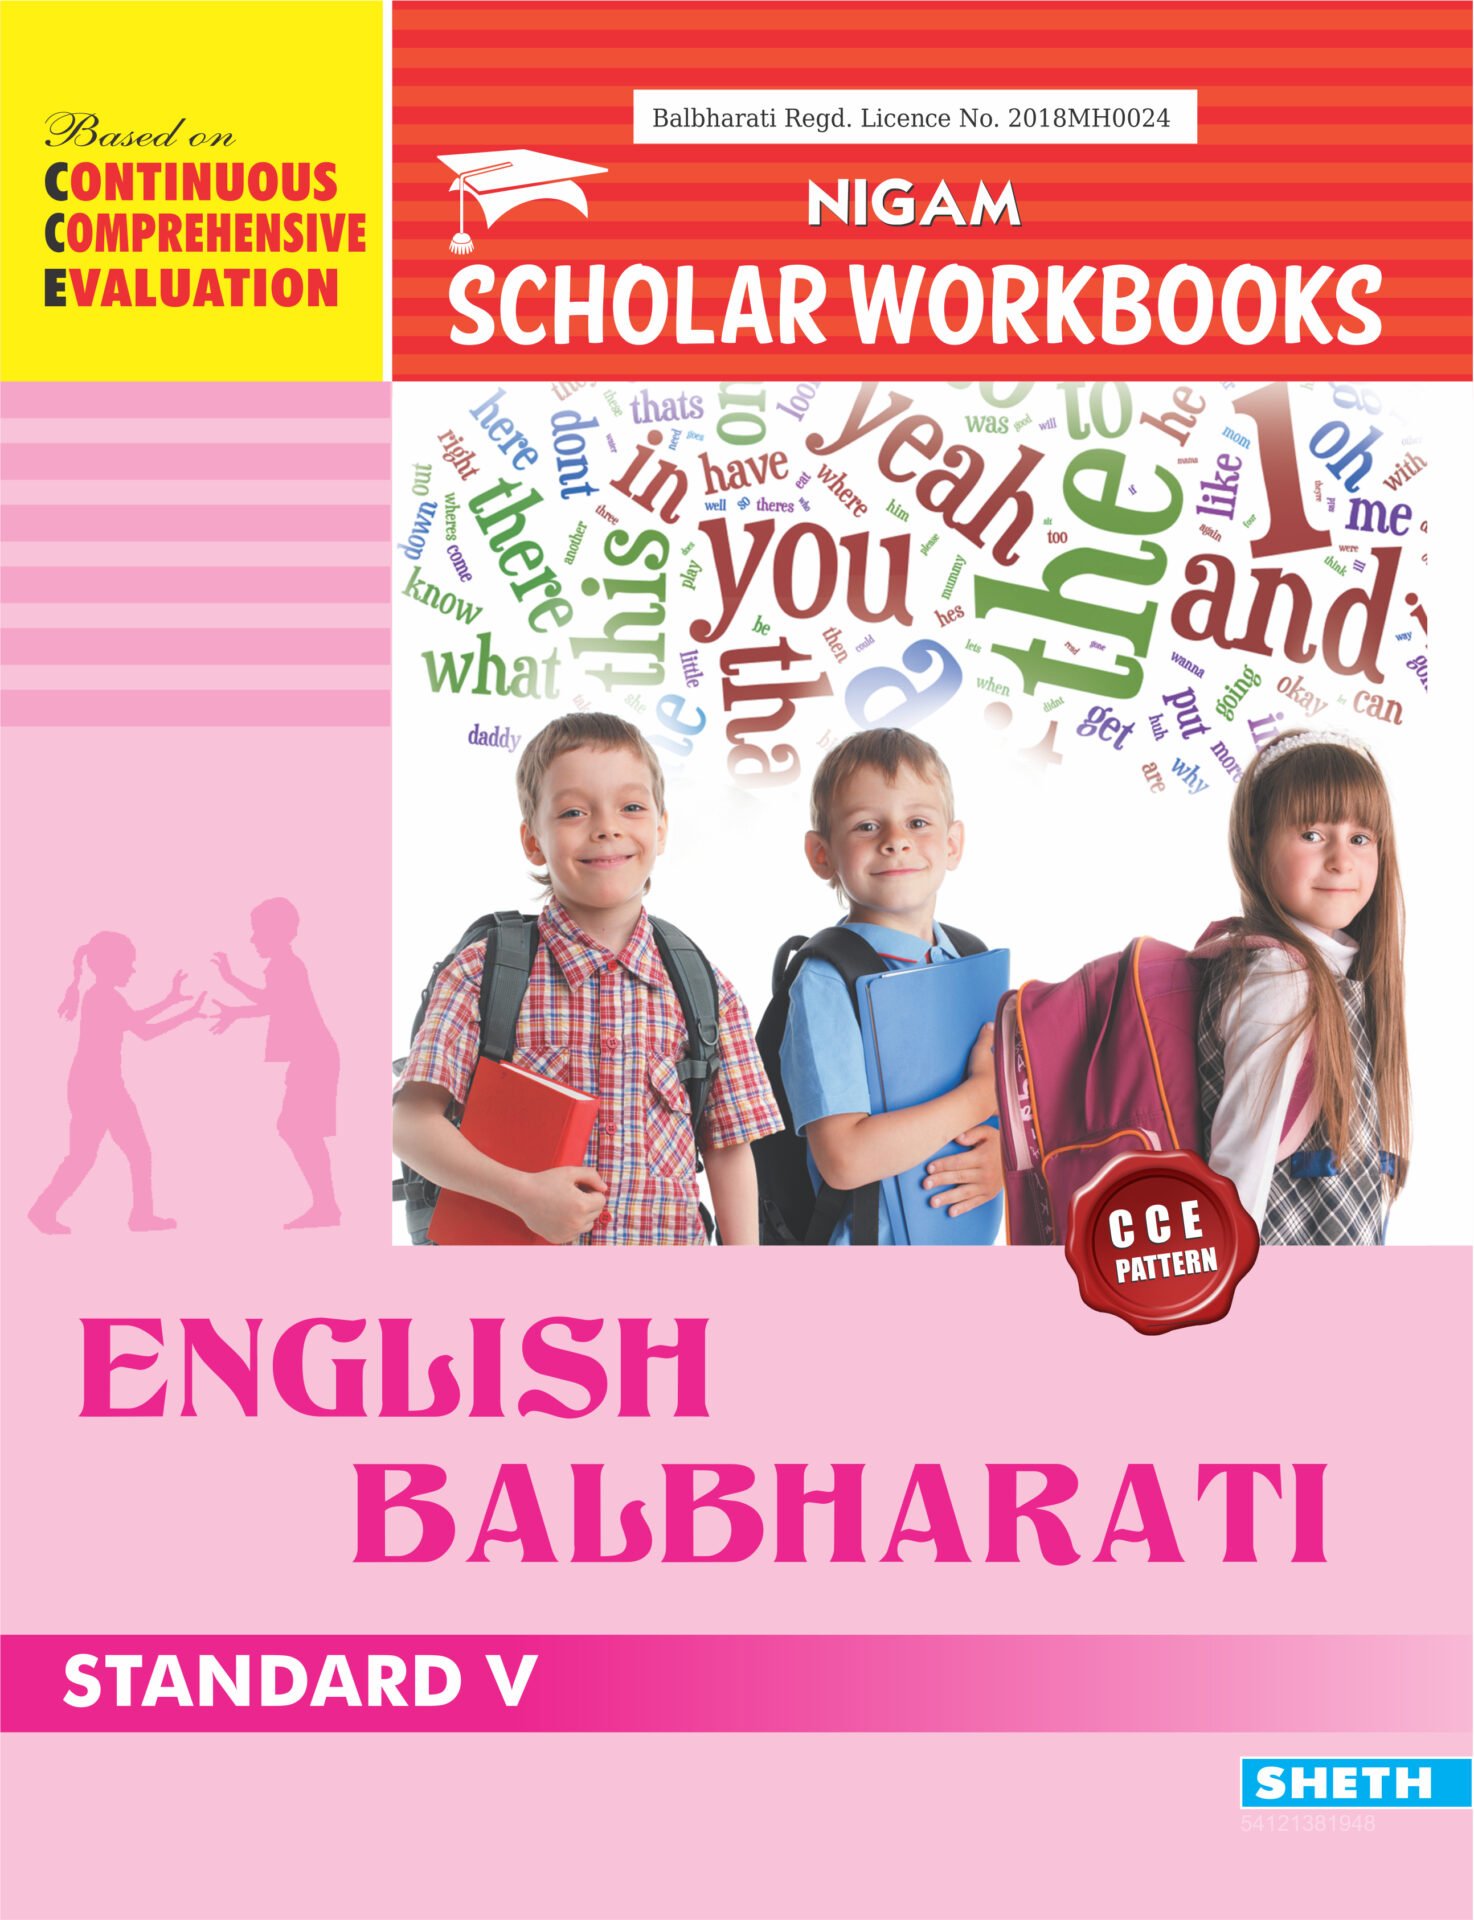 CCE Pattern Nigam Scholar Workbooks English Balbharati Standard 5 1